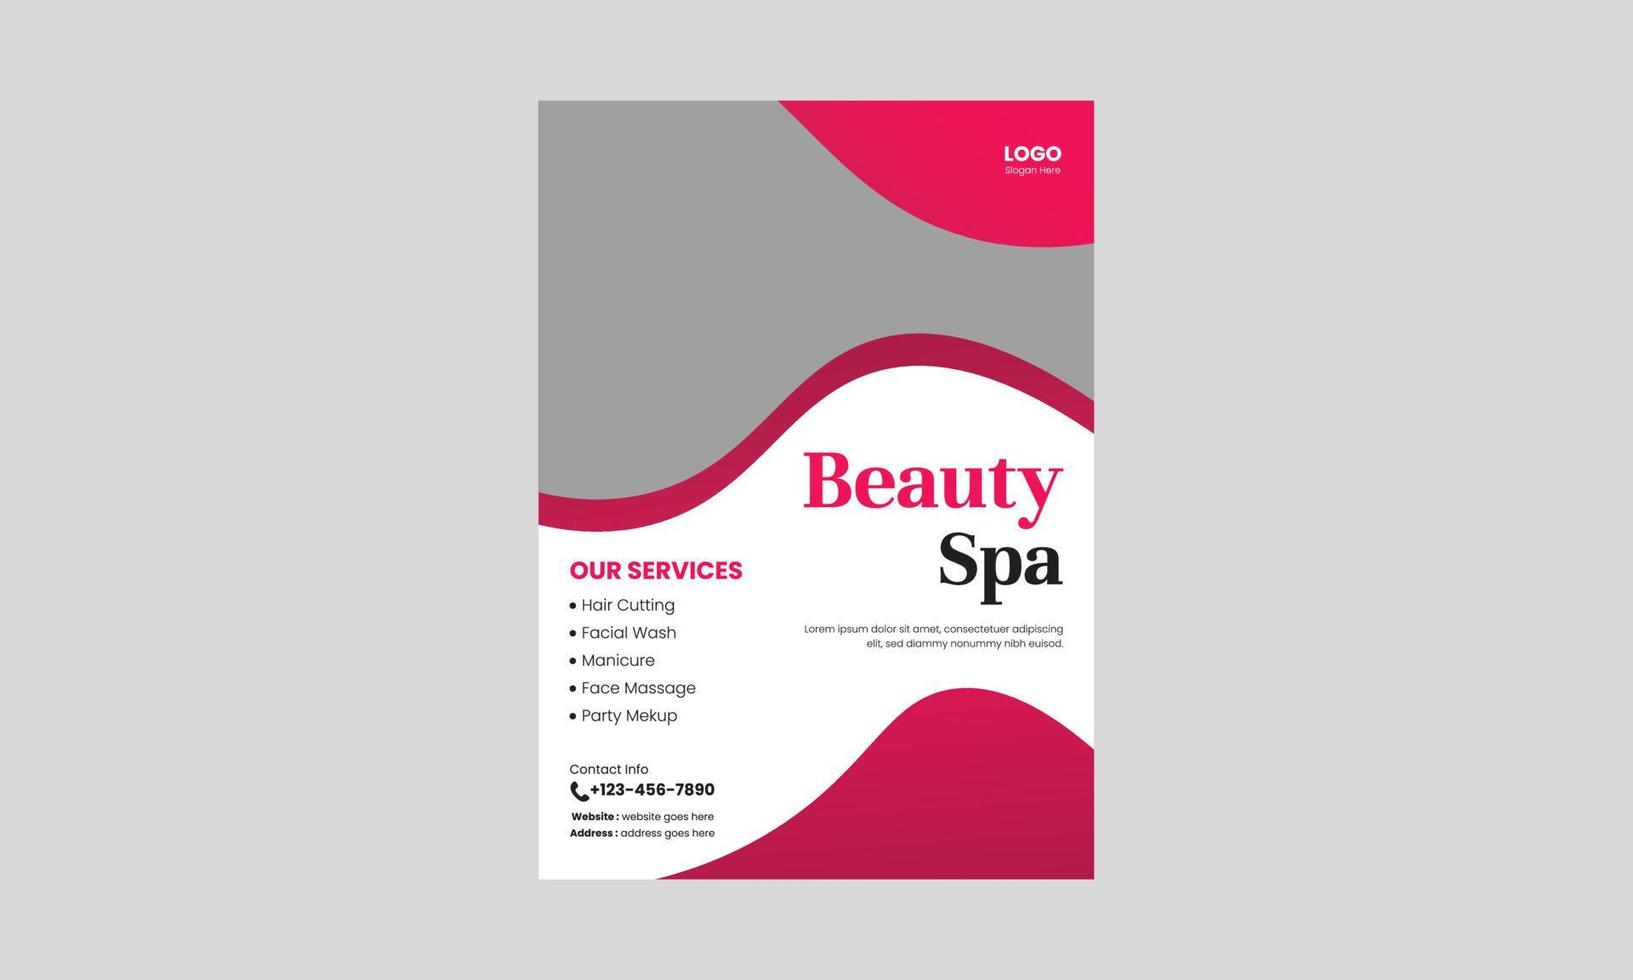 Spa-, Beauty- und Massage-Flyer-Designvorlage. Beauty-Spa-Friseursalon druckfertiges Flyer-Vorlagendesign. faltblatt, a4-größe, flyer, cover, poster, broschürendesign vektor